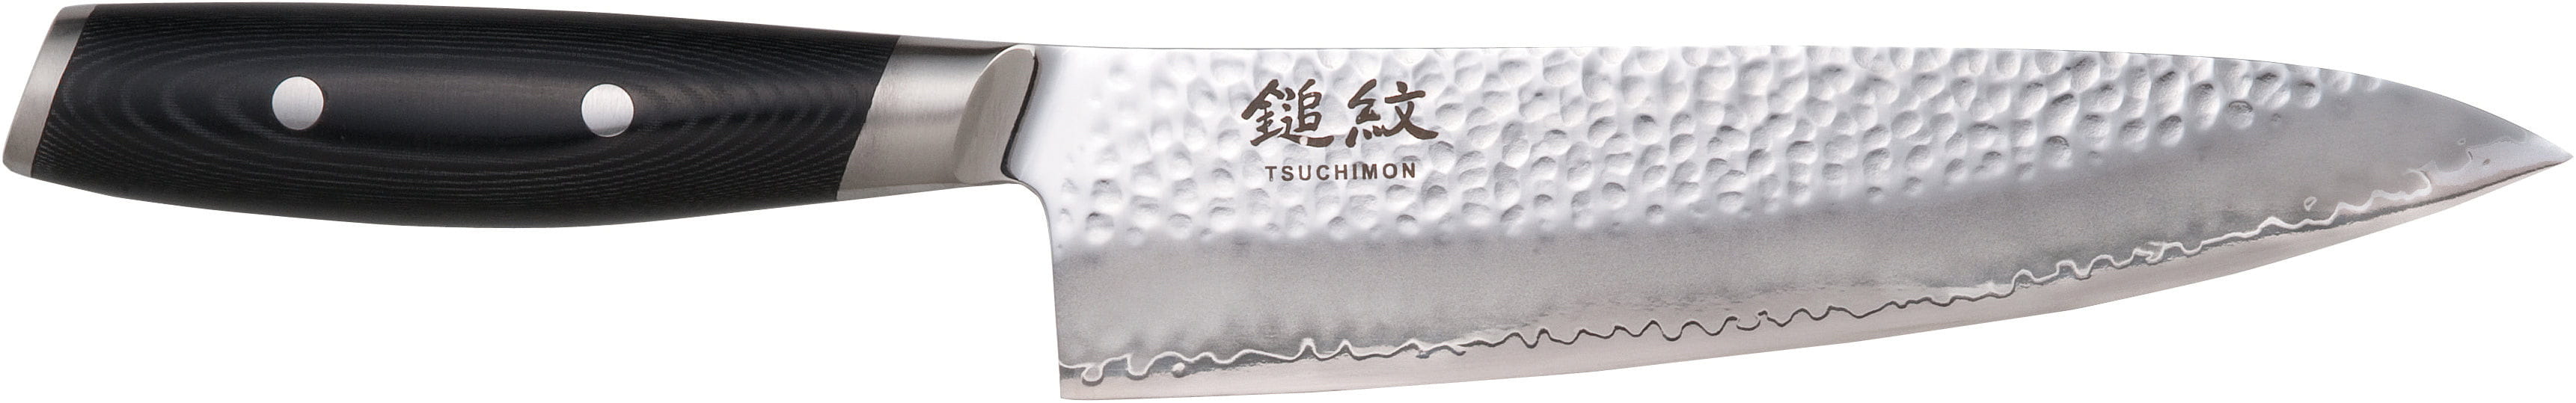 Yaxell Tsuchimon kokkur, 20 cm